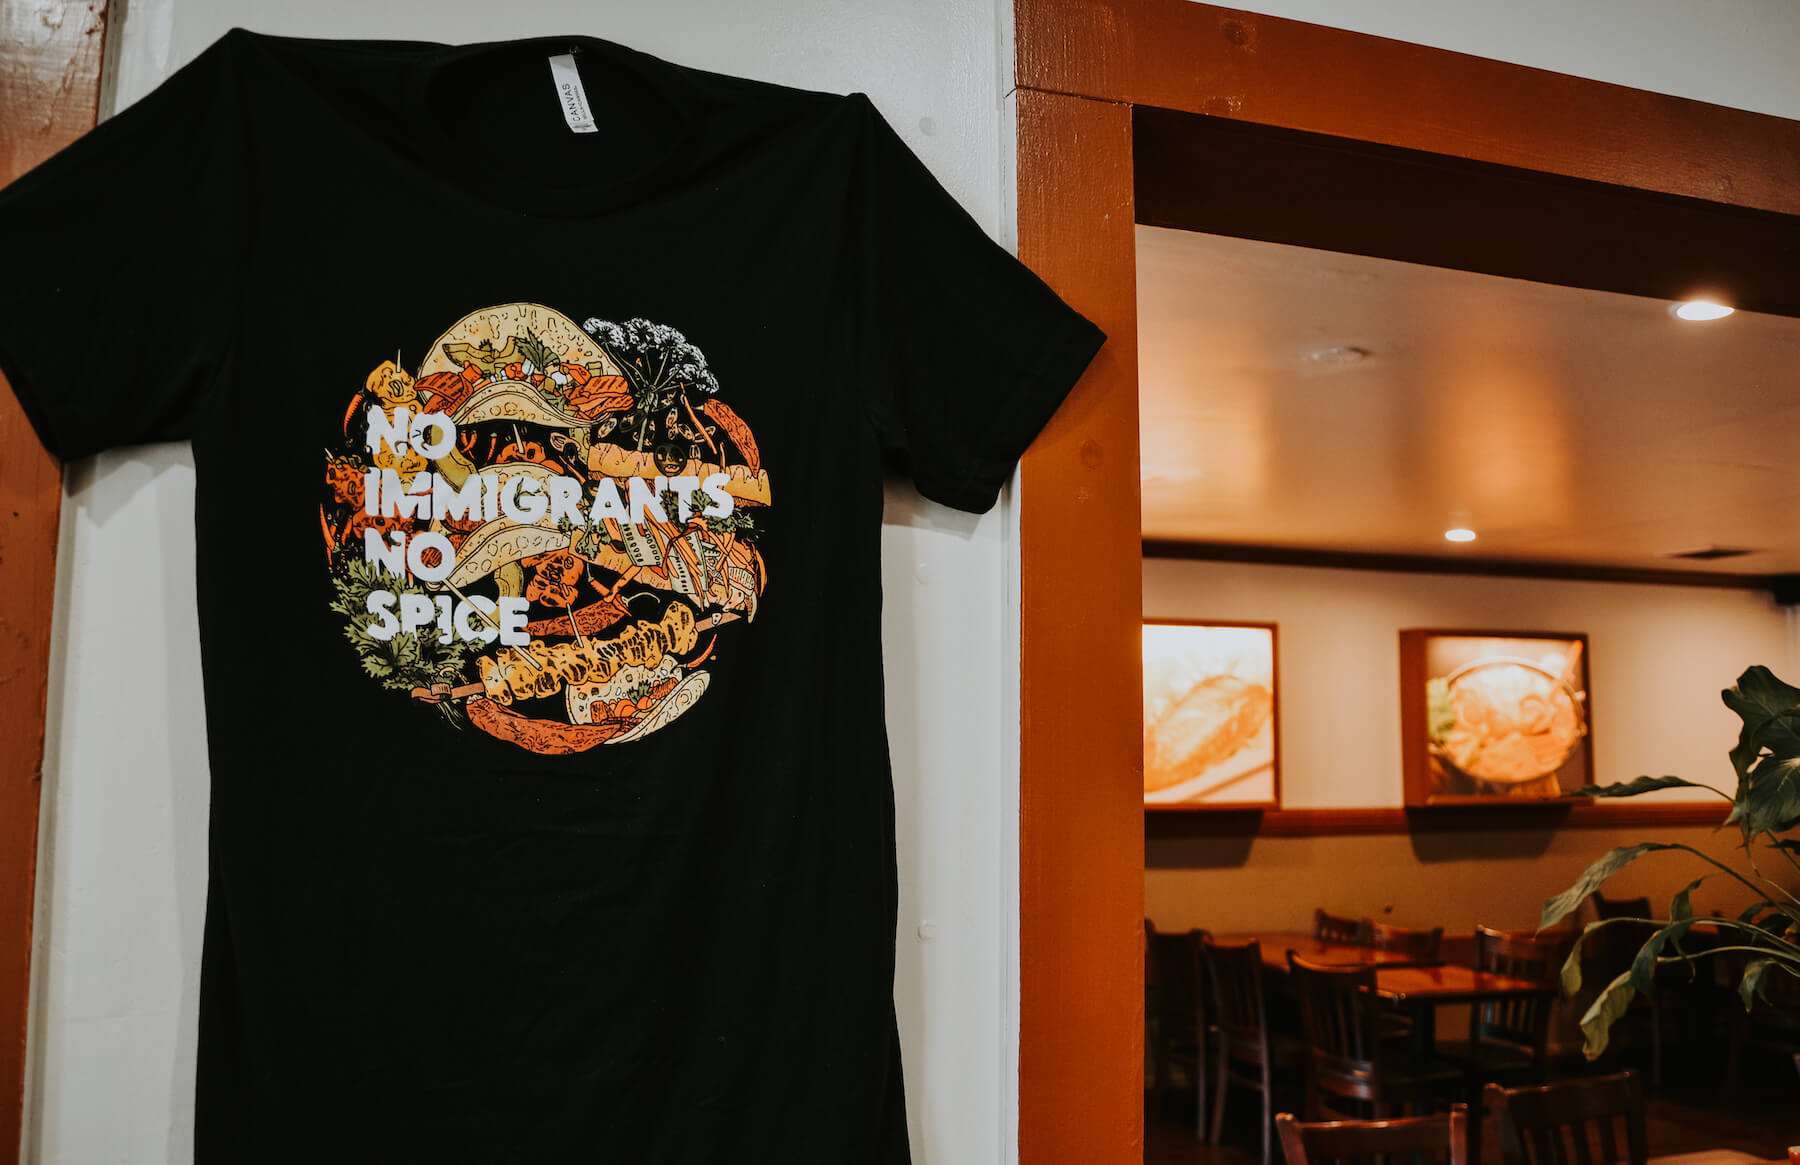 No Immigants No Spice T-shirt inside Daol Tofu in Oakland, CA. August 2021